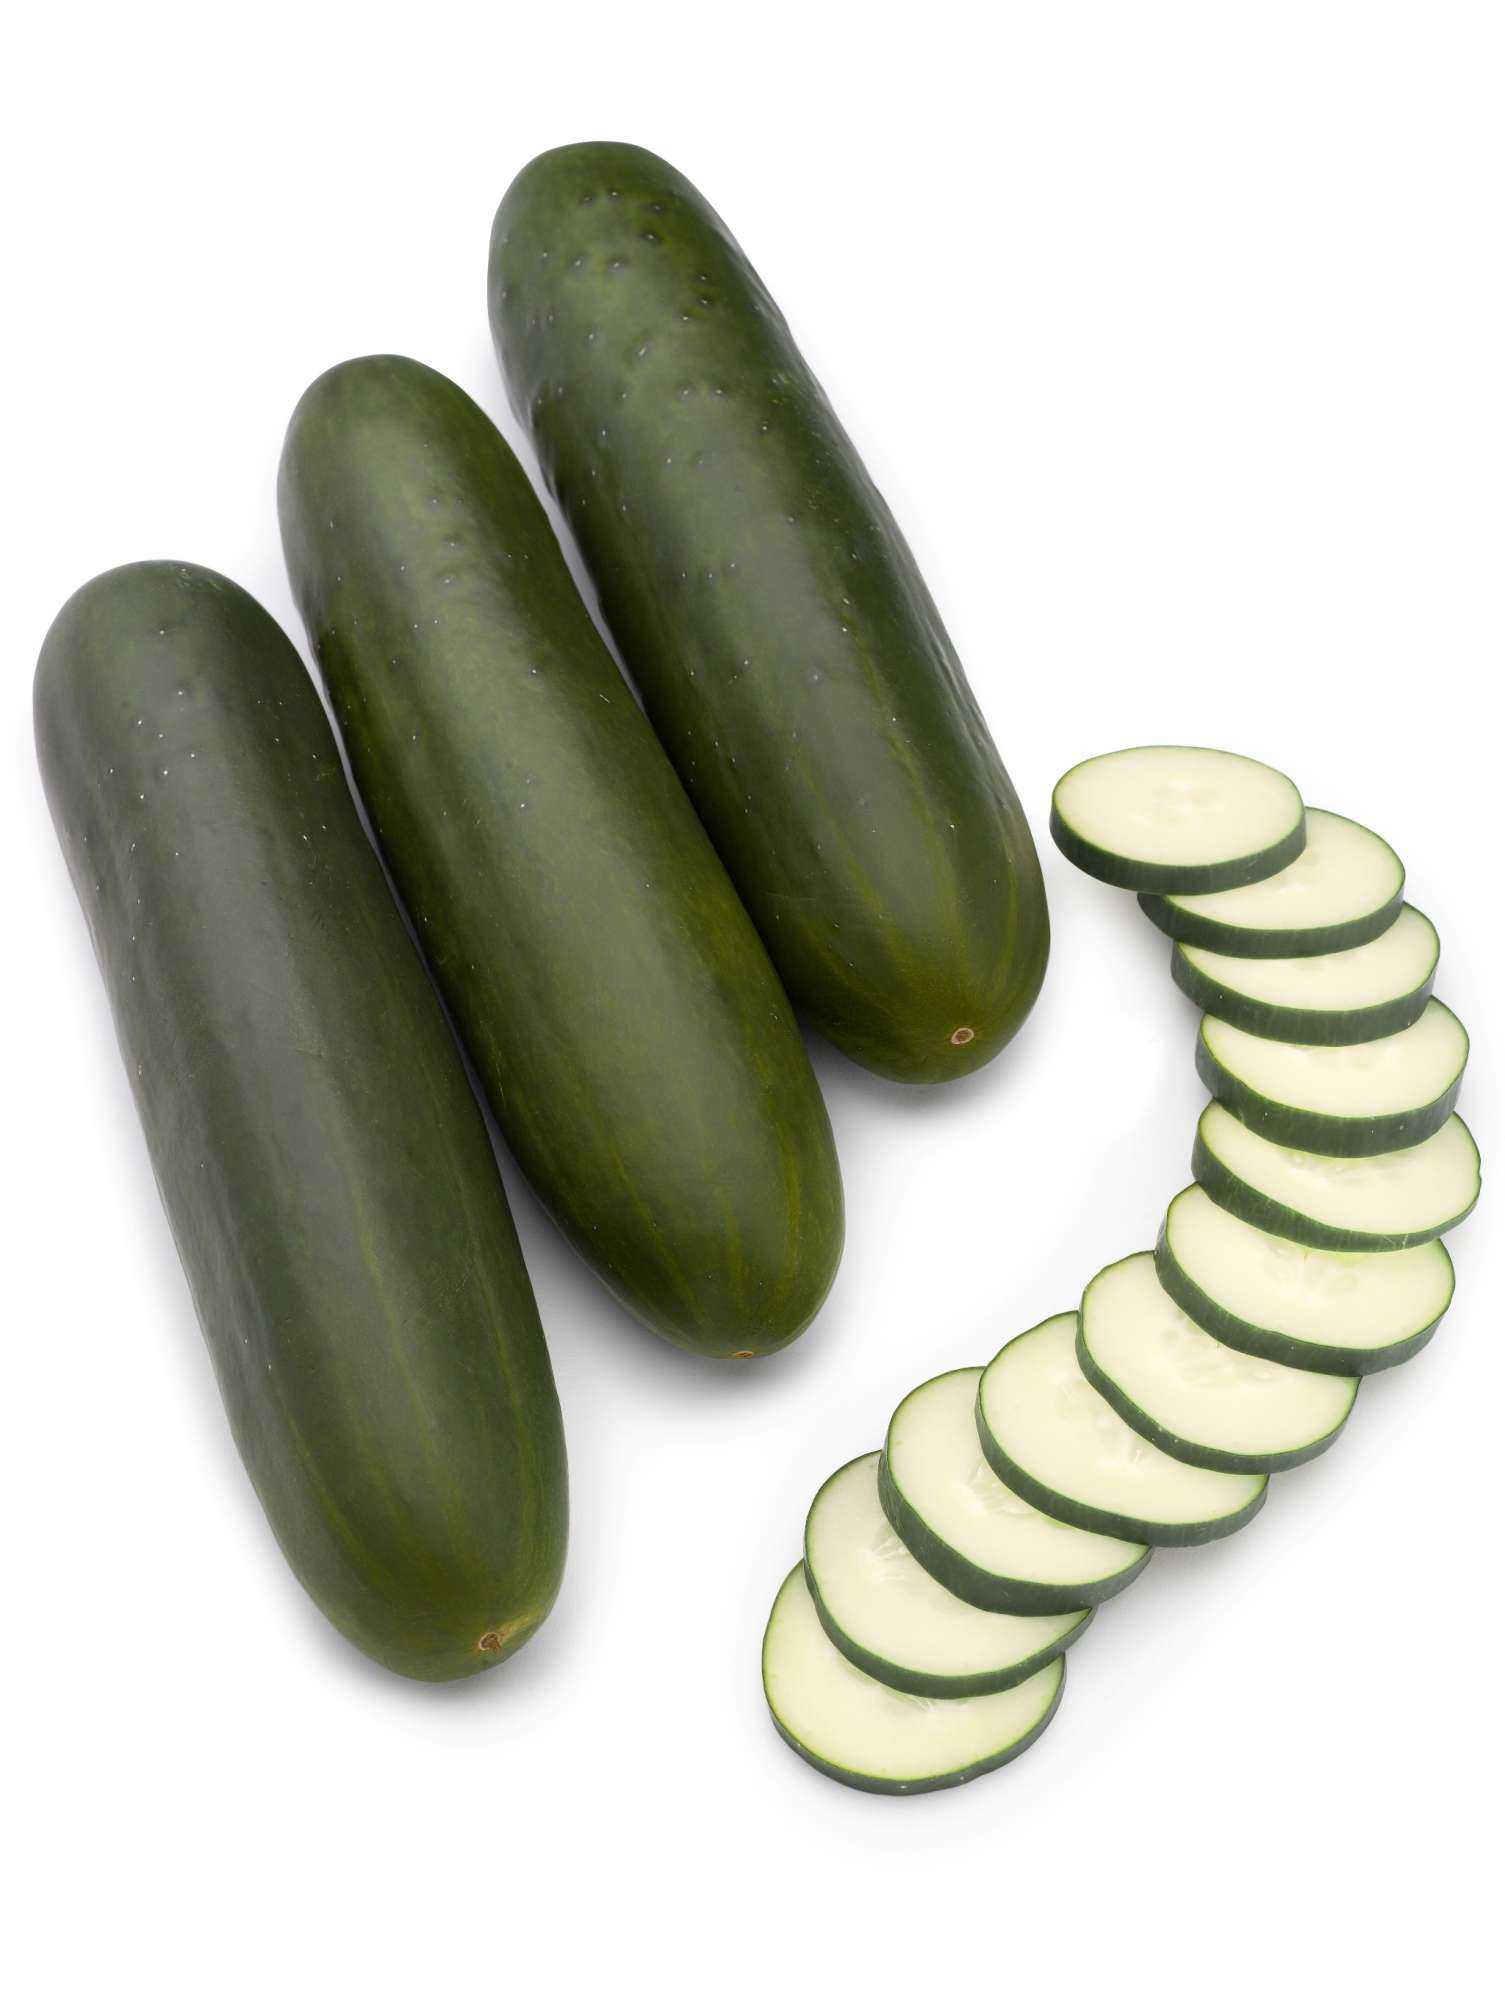 Downy Mildew Resistant Cucumber Varieties - Growing Produce